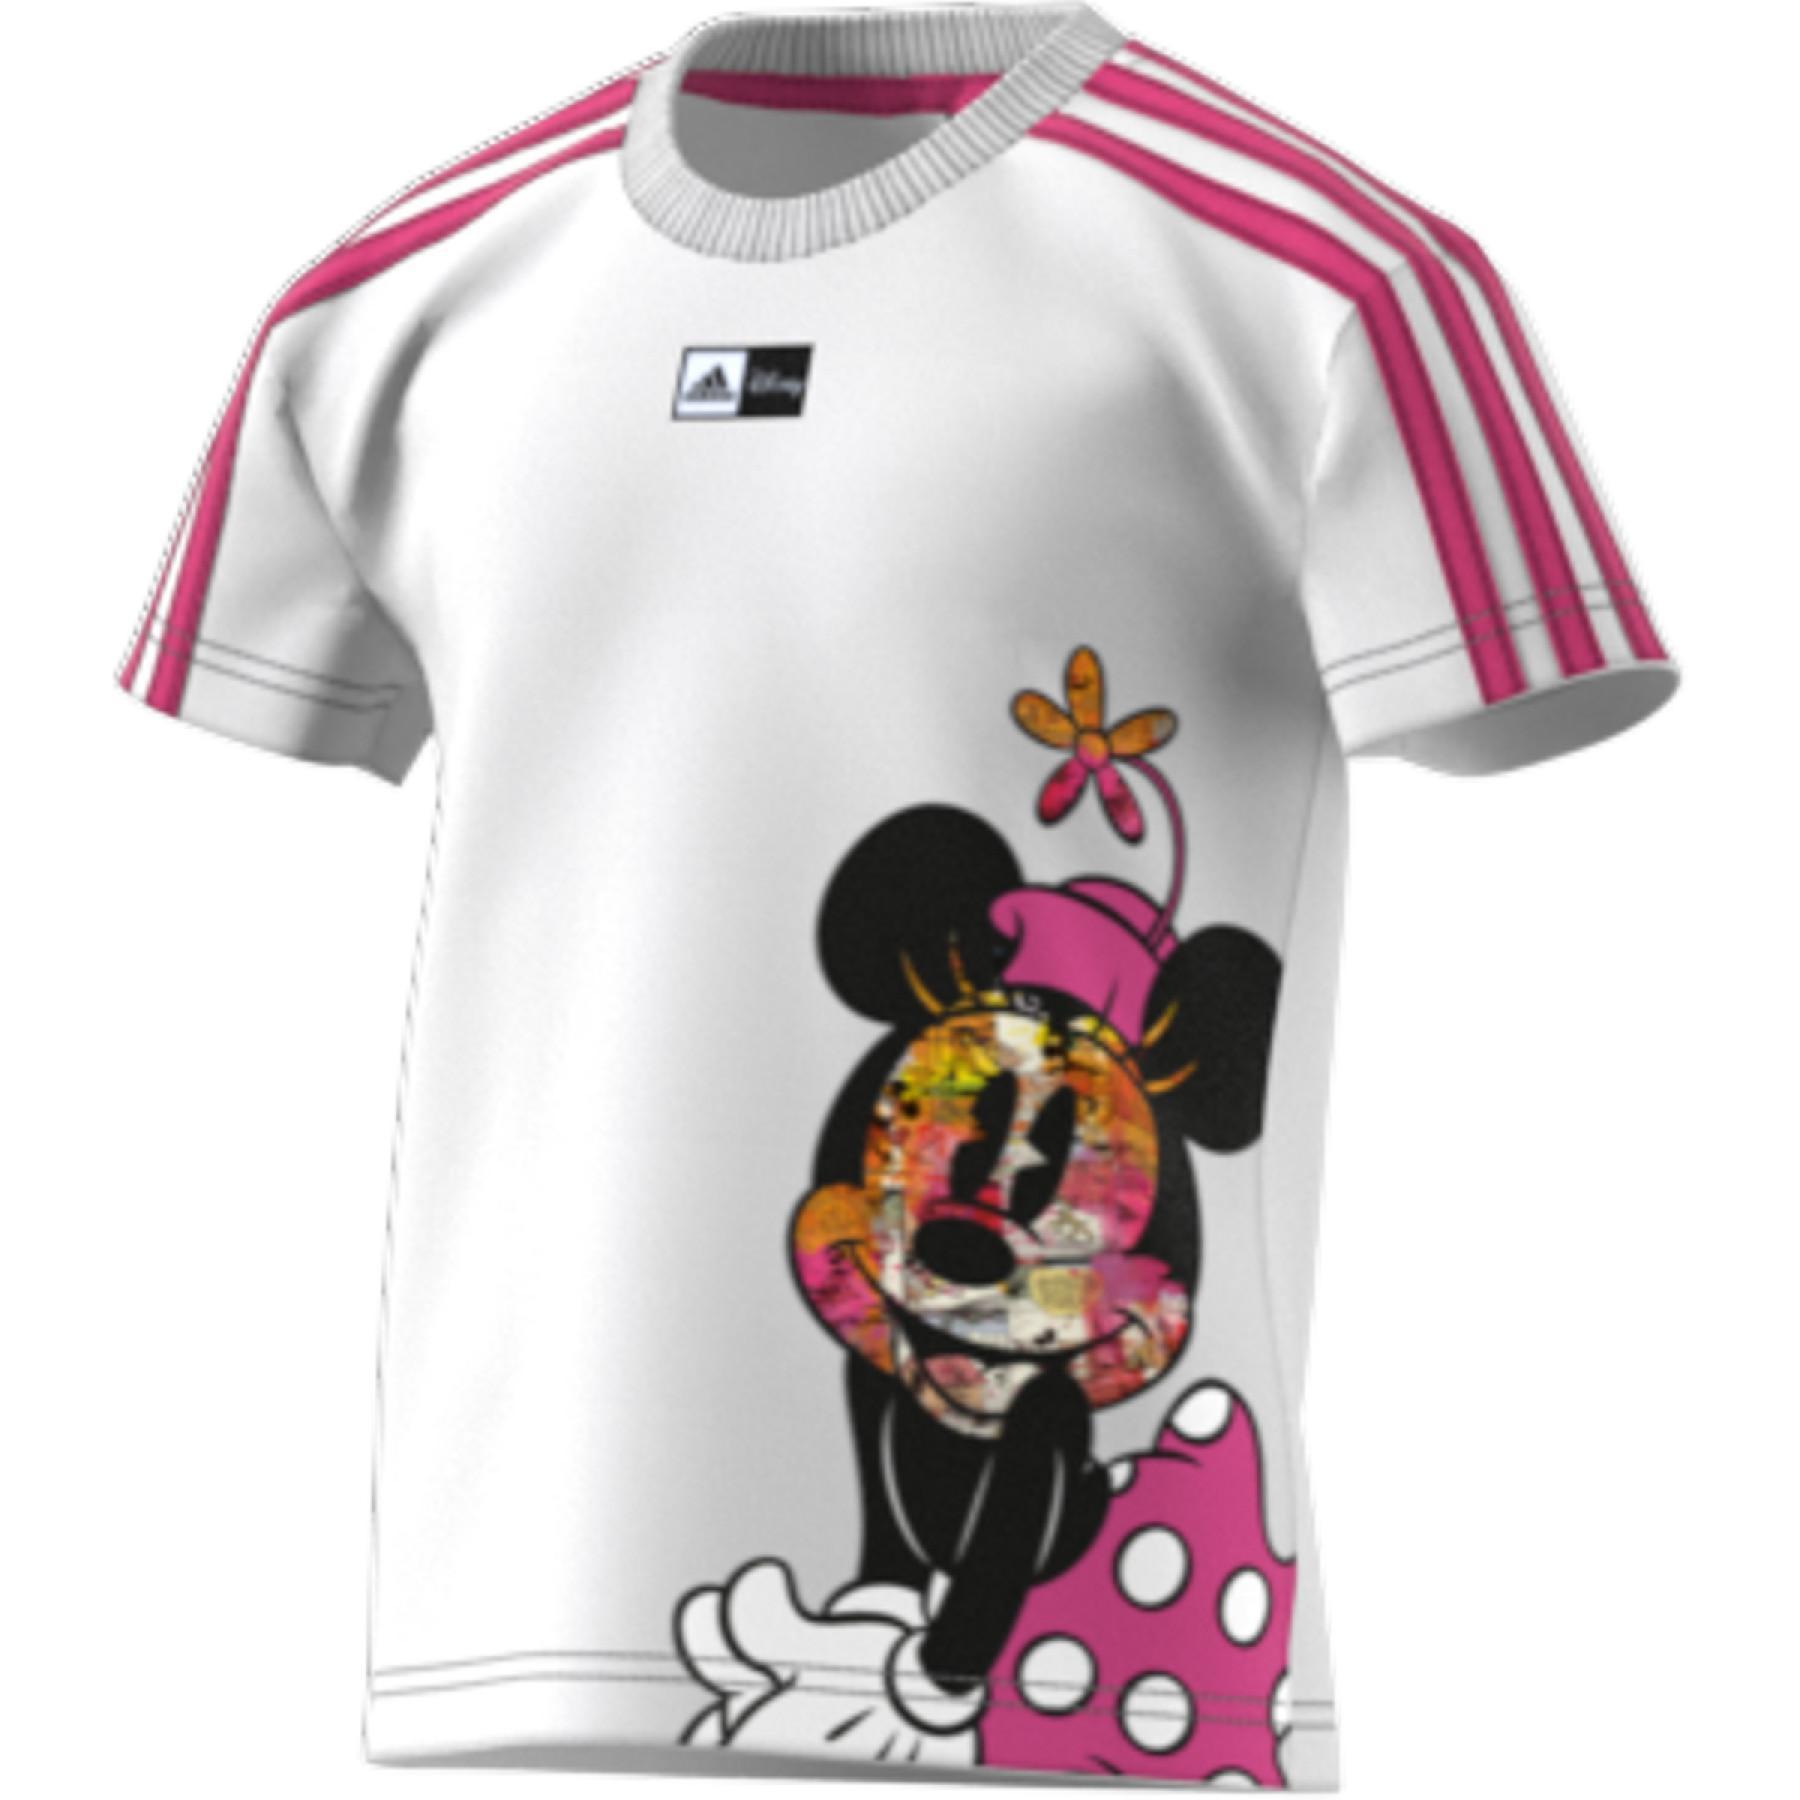 Koszulka damska adidas Disney Minnie Mouse